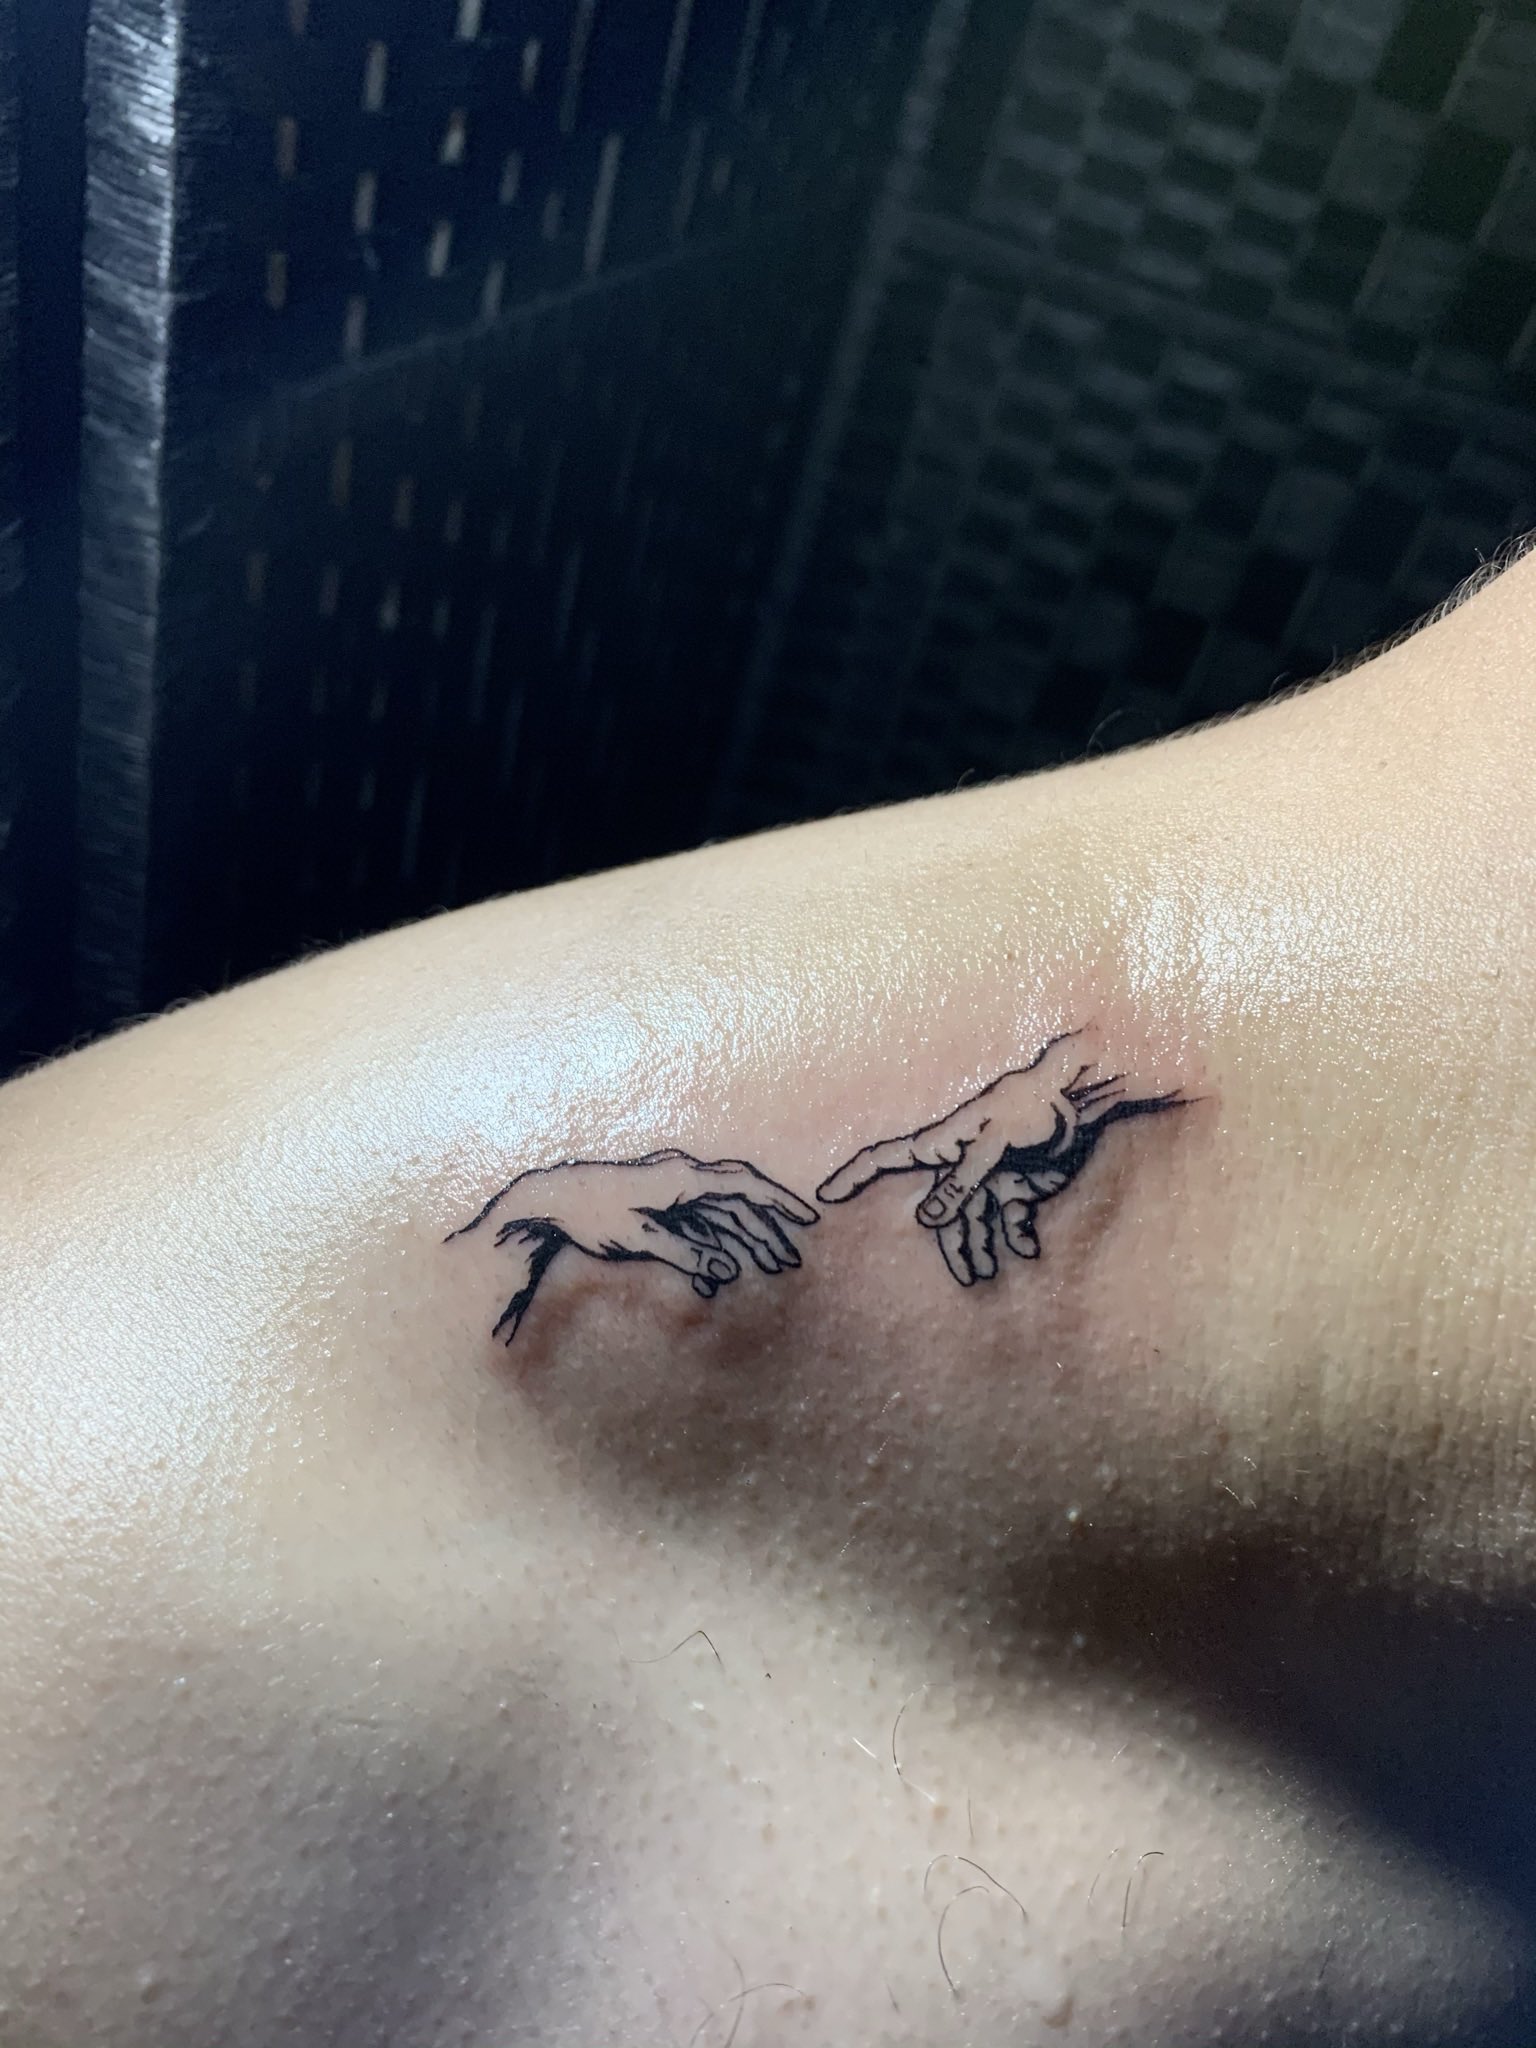 Ink N Roses on Twitter Cats of creation   tattoo tattoos ink  inked tattooing tattoosinegypt cairotattoo tattoochallenge  tattooartistegypt hurghada egyptiantattoosartist inknroses  httpstcokNDrQ1T69f  Twitter